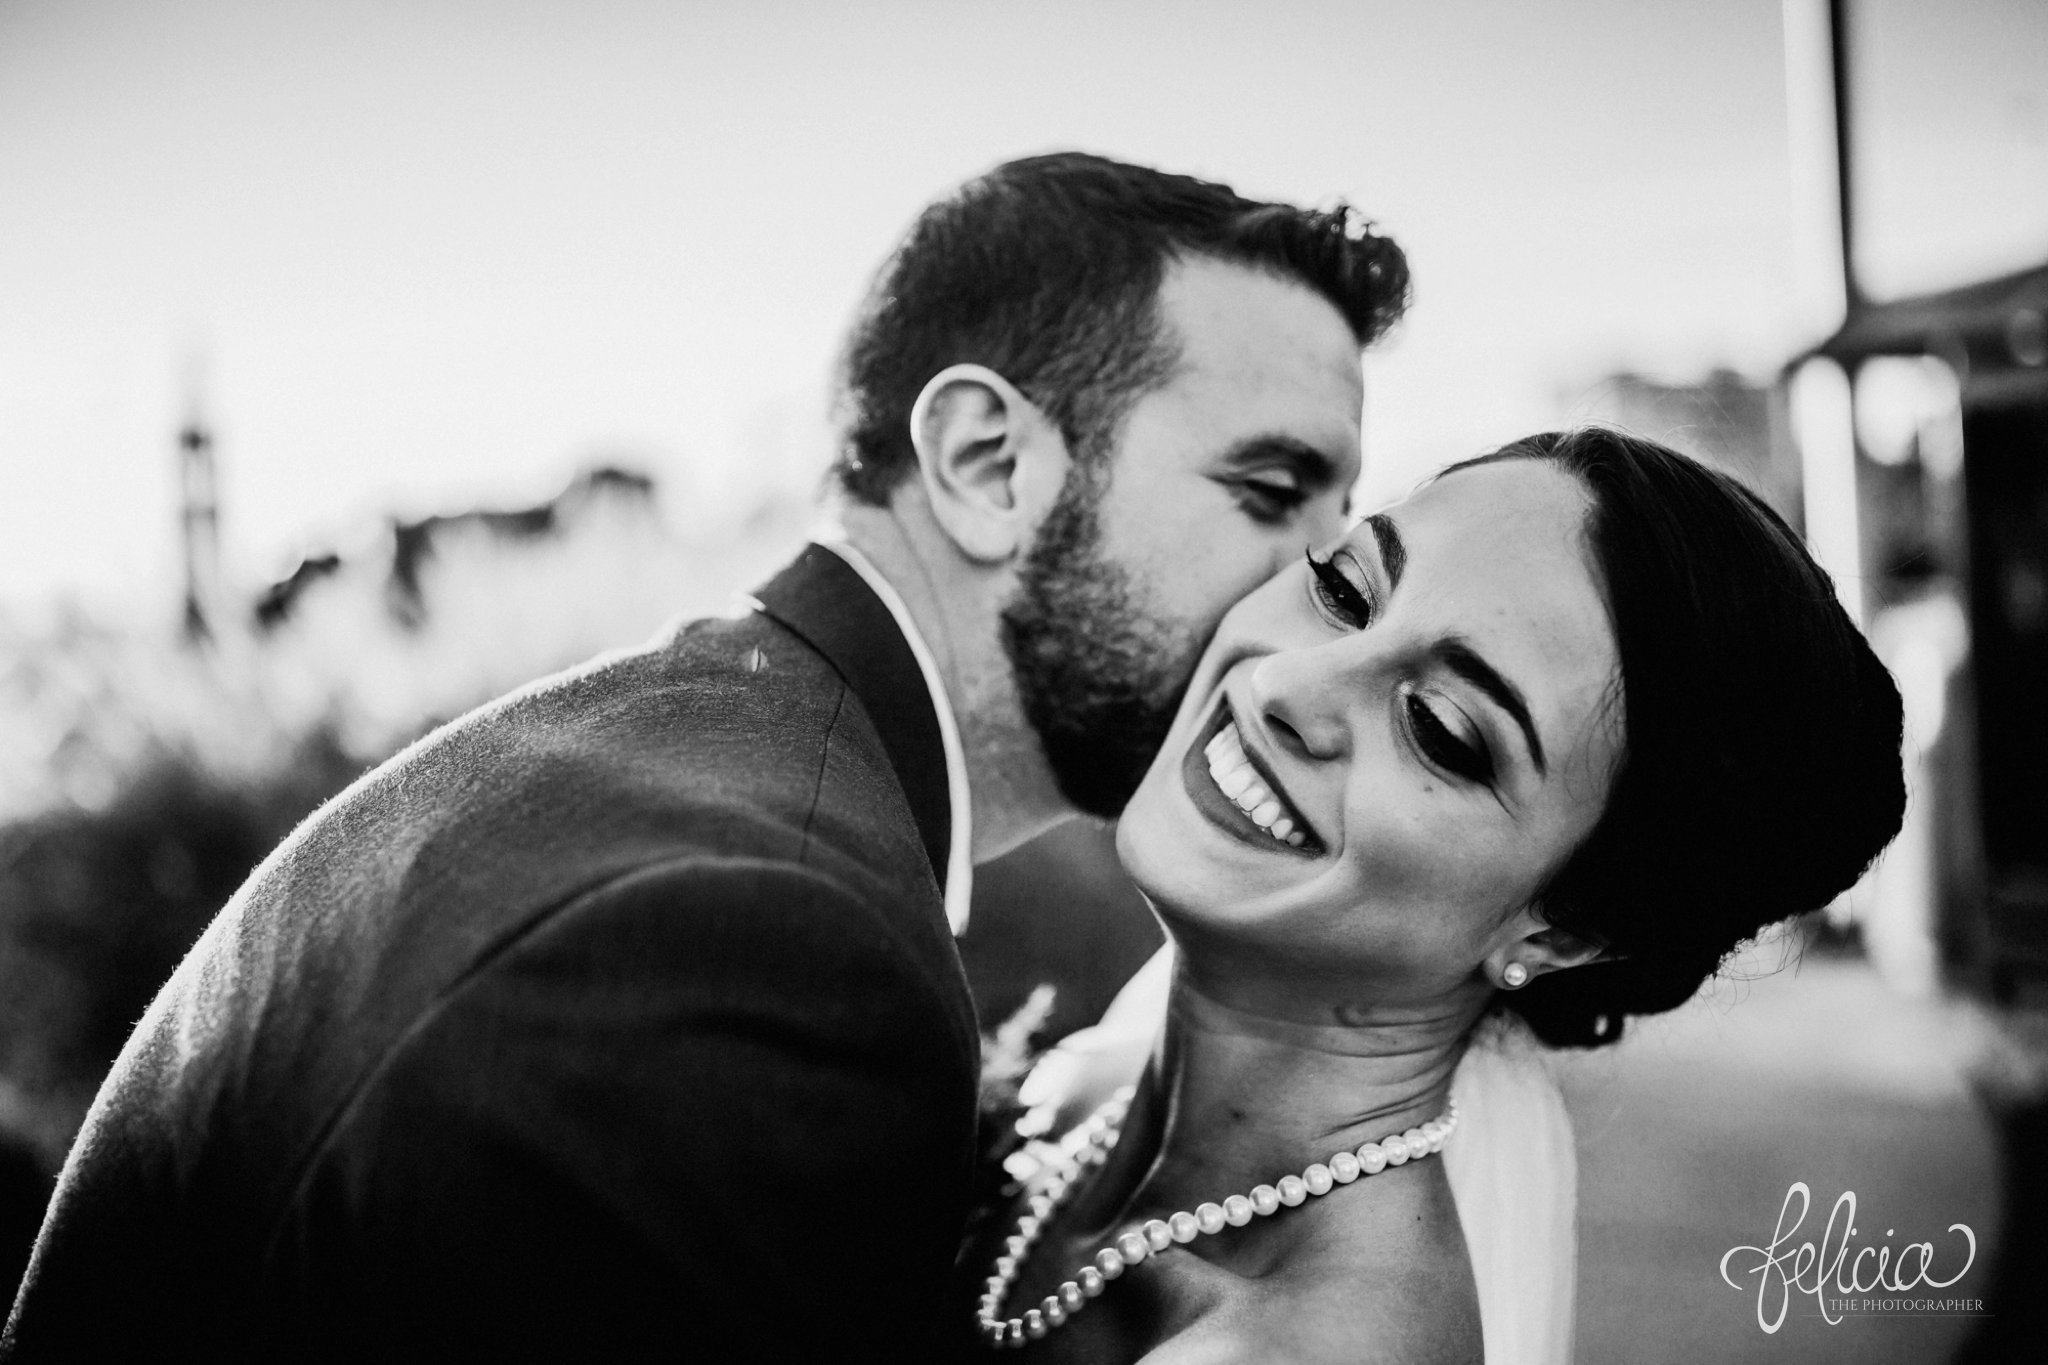 images by feliciathephotographer.com | wedding photographer | kansas city | portrait | bride and groom | pearls | kiss on the cheek | joy | smokey eye | black and white | 